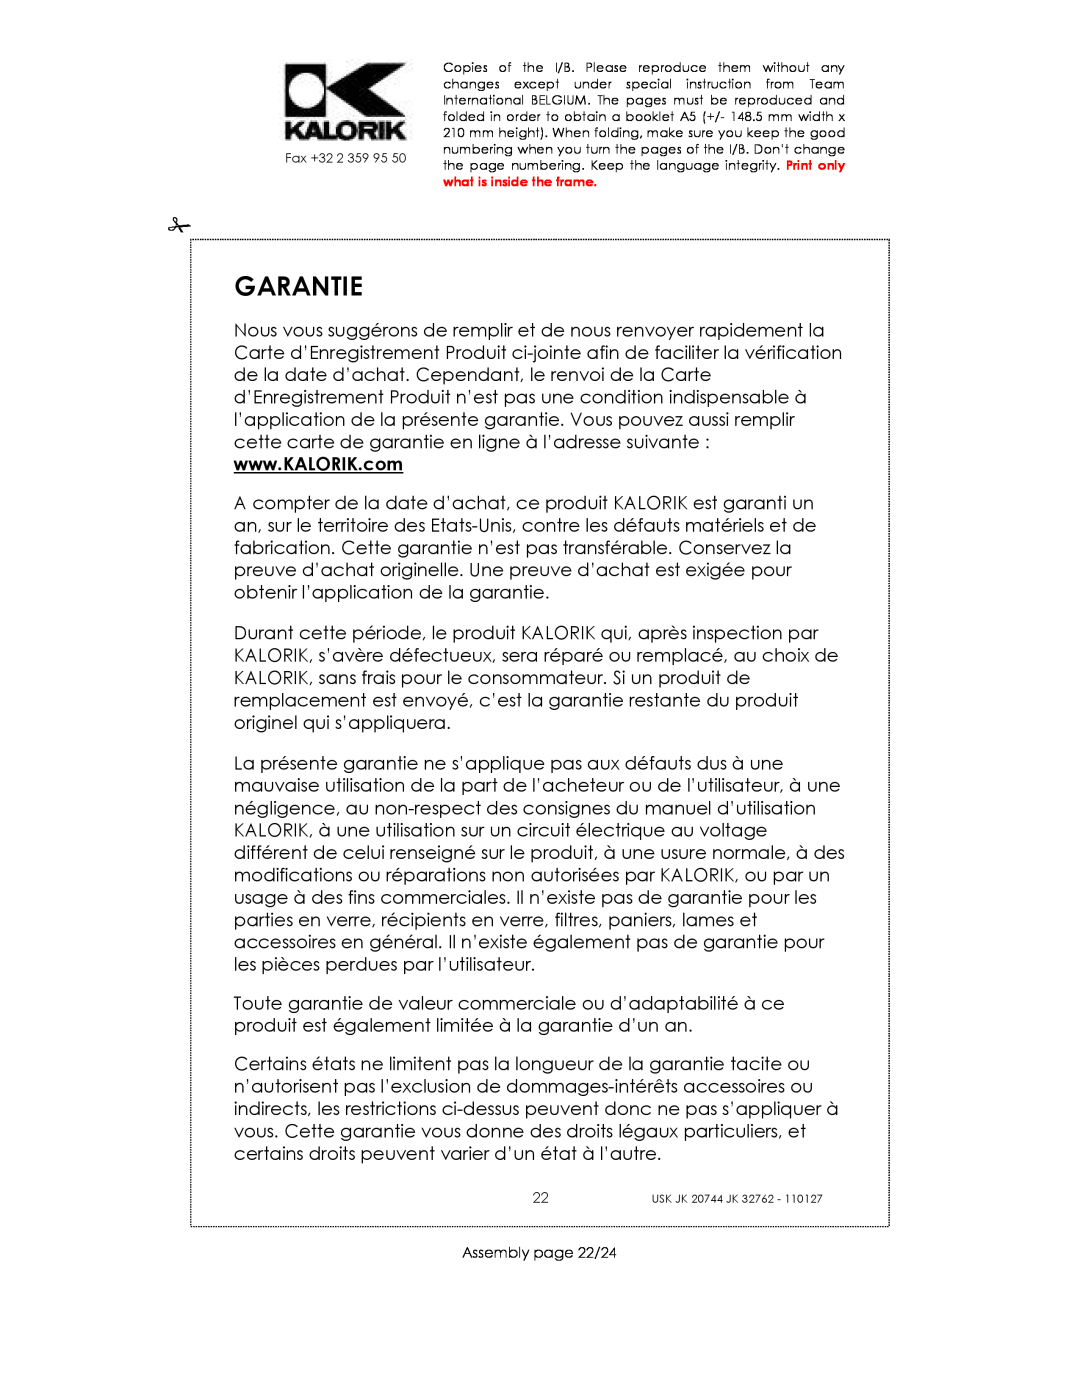 Kalorik USK JK 32762, USK JK 20744 manual Garantie, Assembly page 22/24 